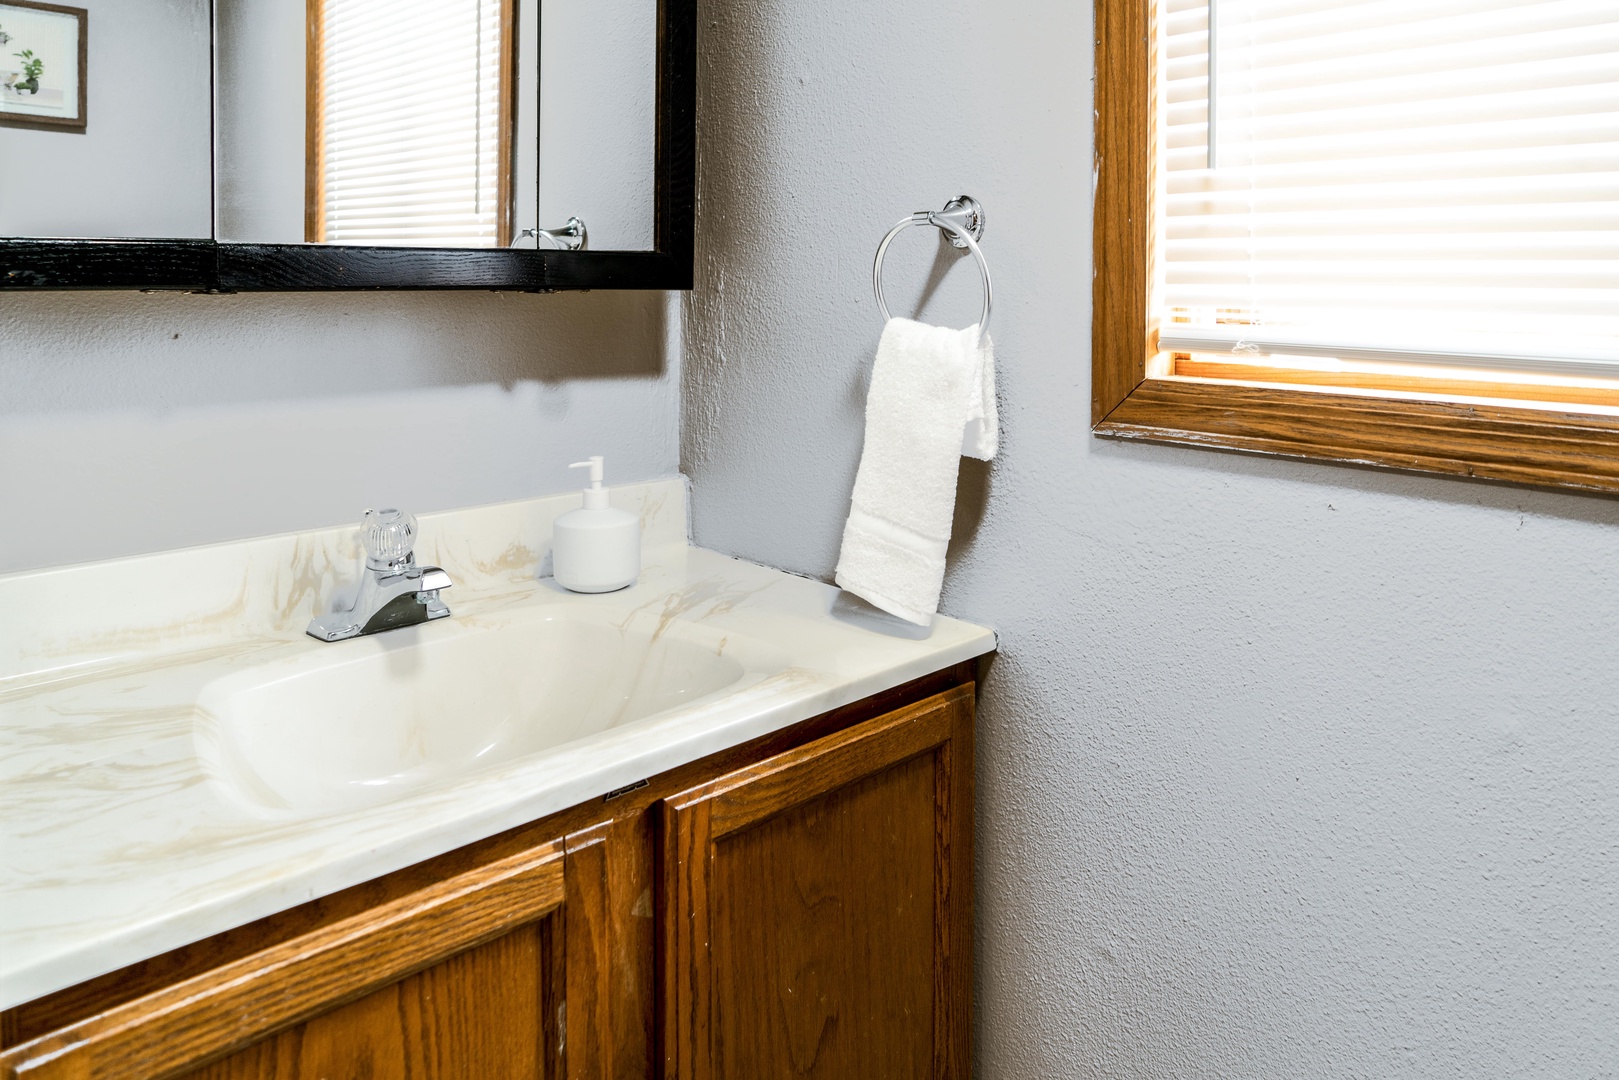 The half-shared bathroom offers a single vanity sink